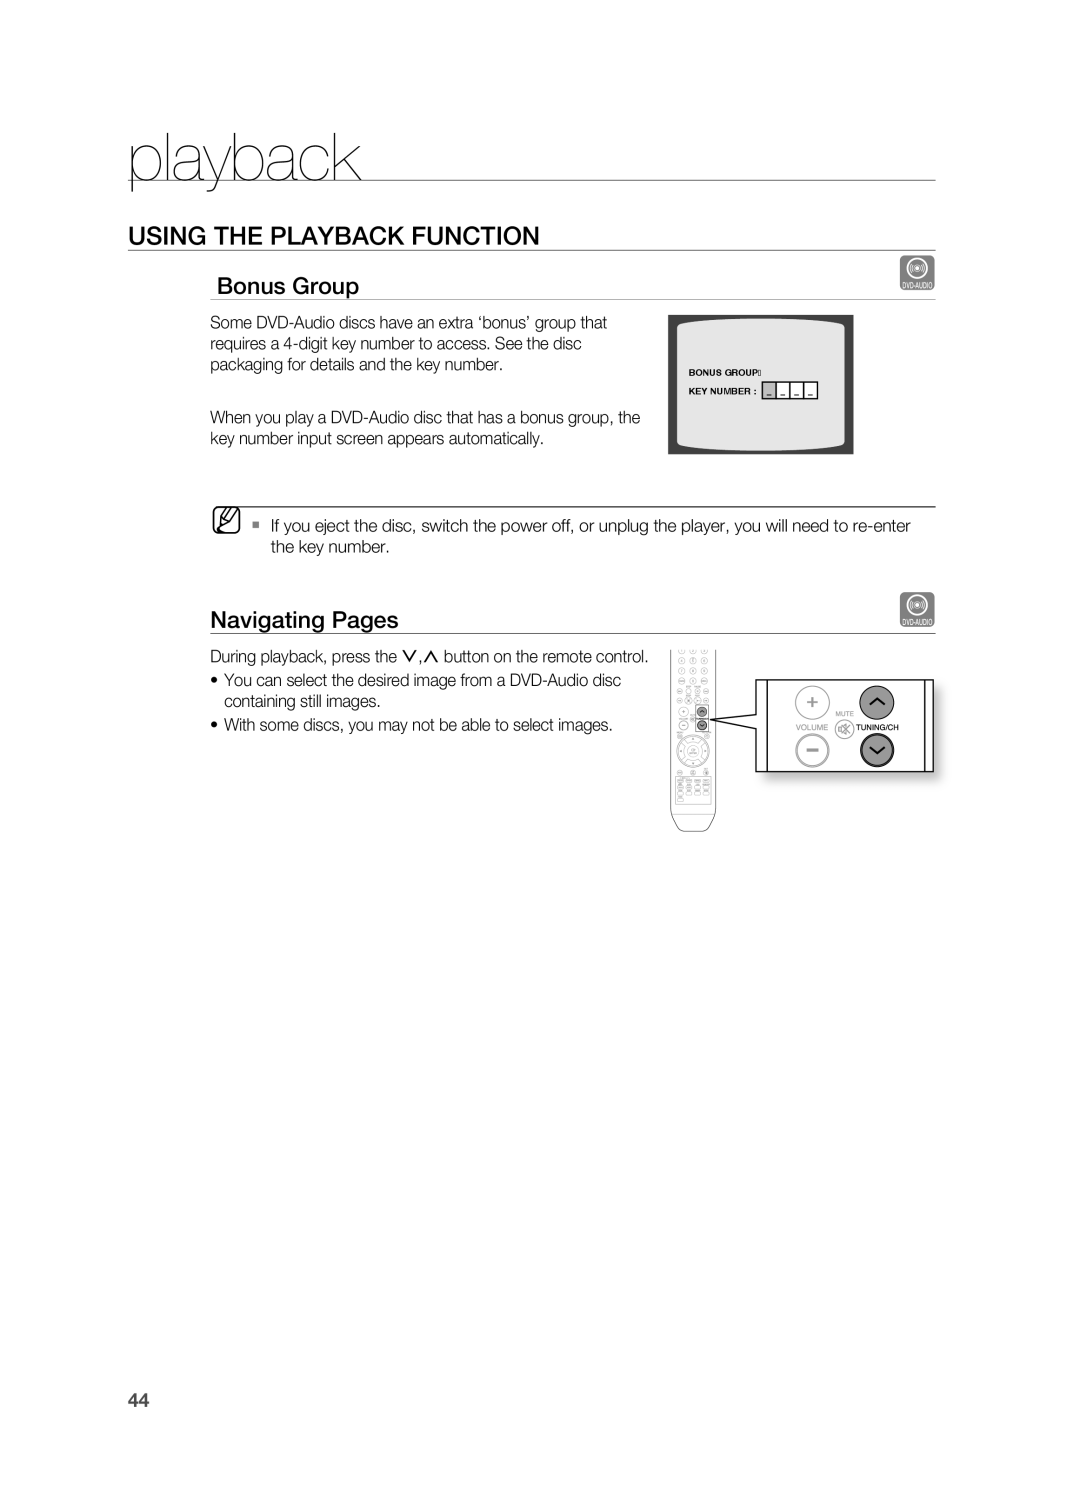 Samsung HT-TZ312 manual navigating Pages, playback, USinG tHE PLayBaCK fUnCtiOn, Bonus Group Key Number 